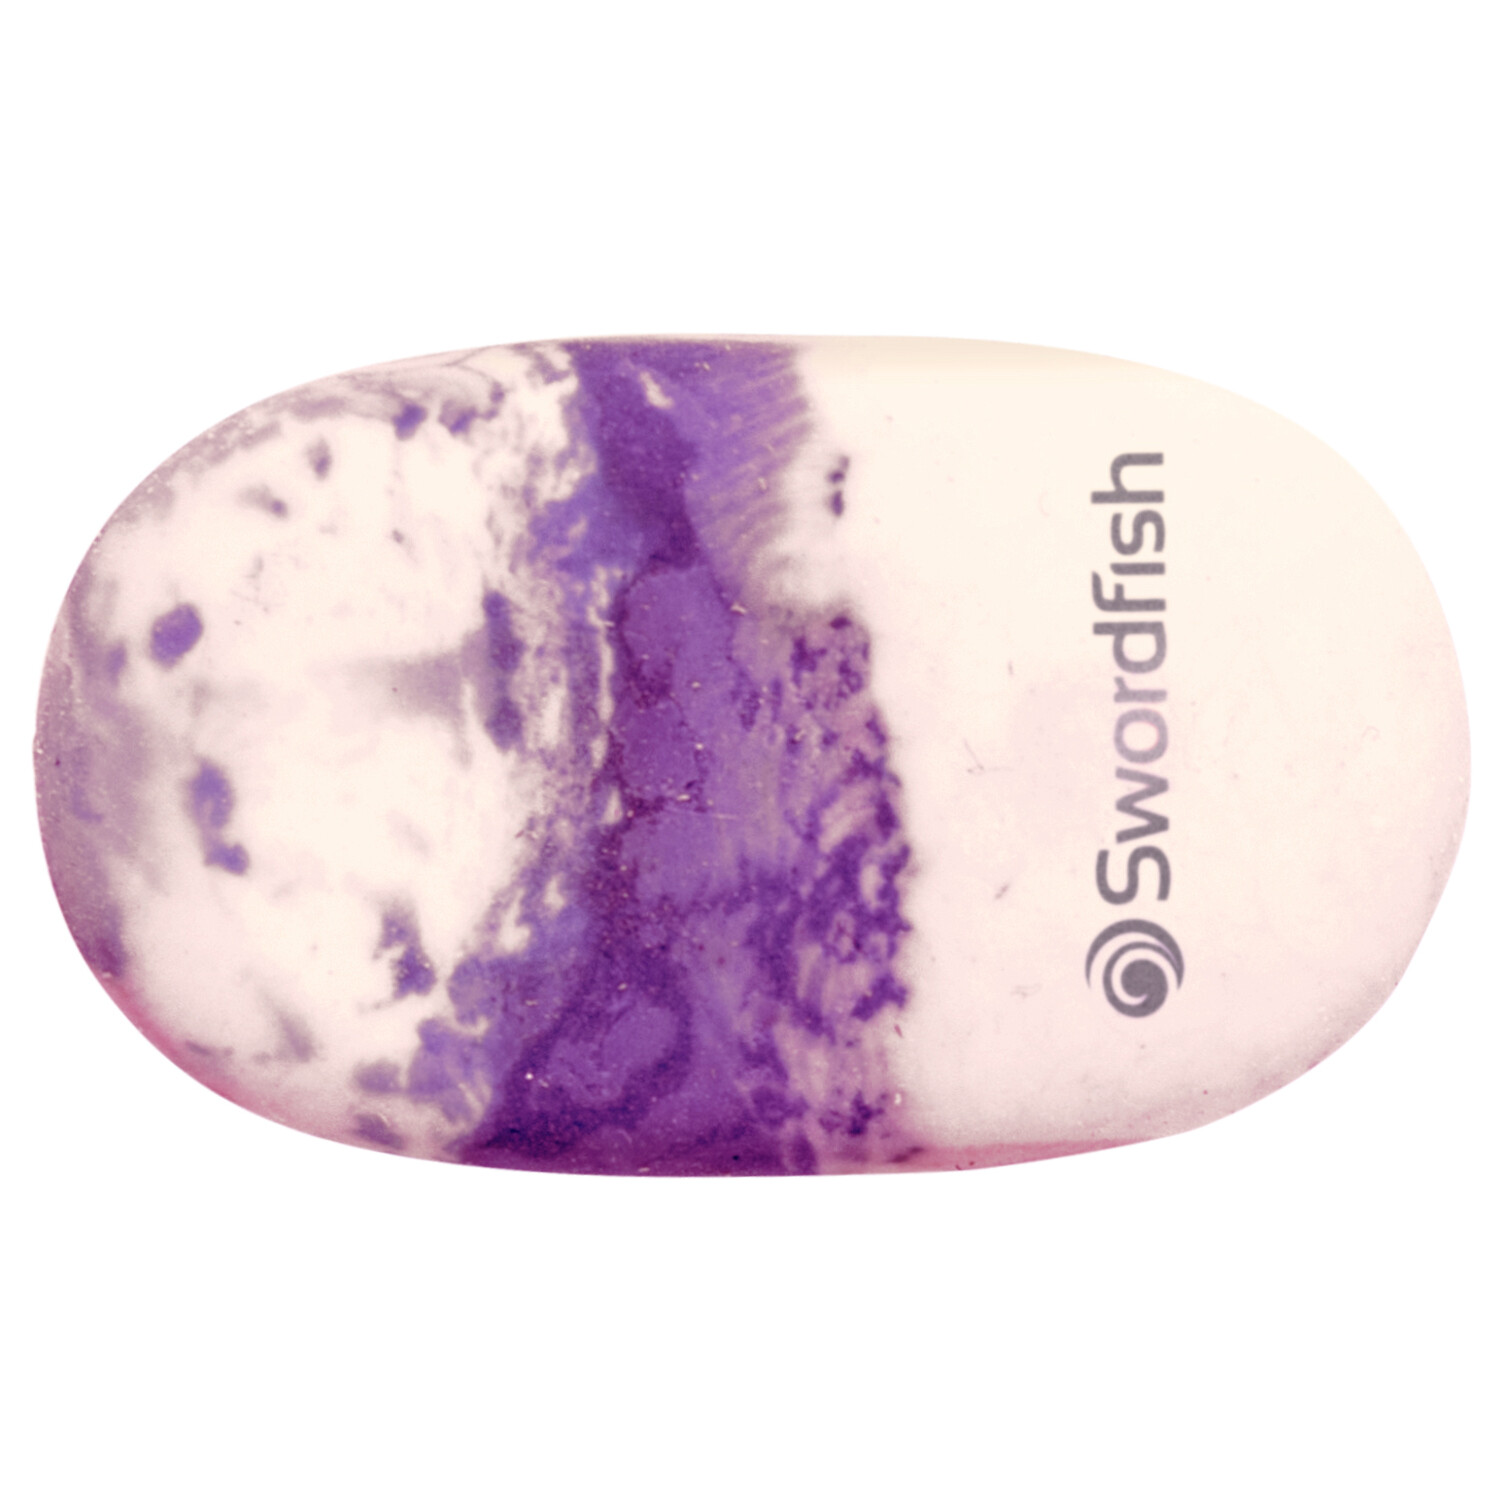 Swordfish Marble Eraser Image 3